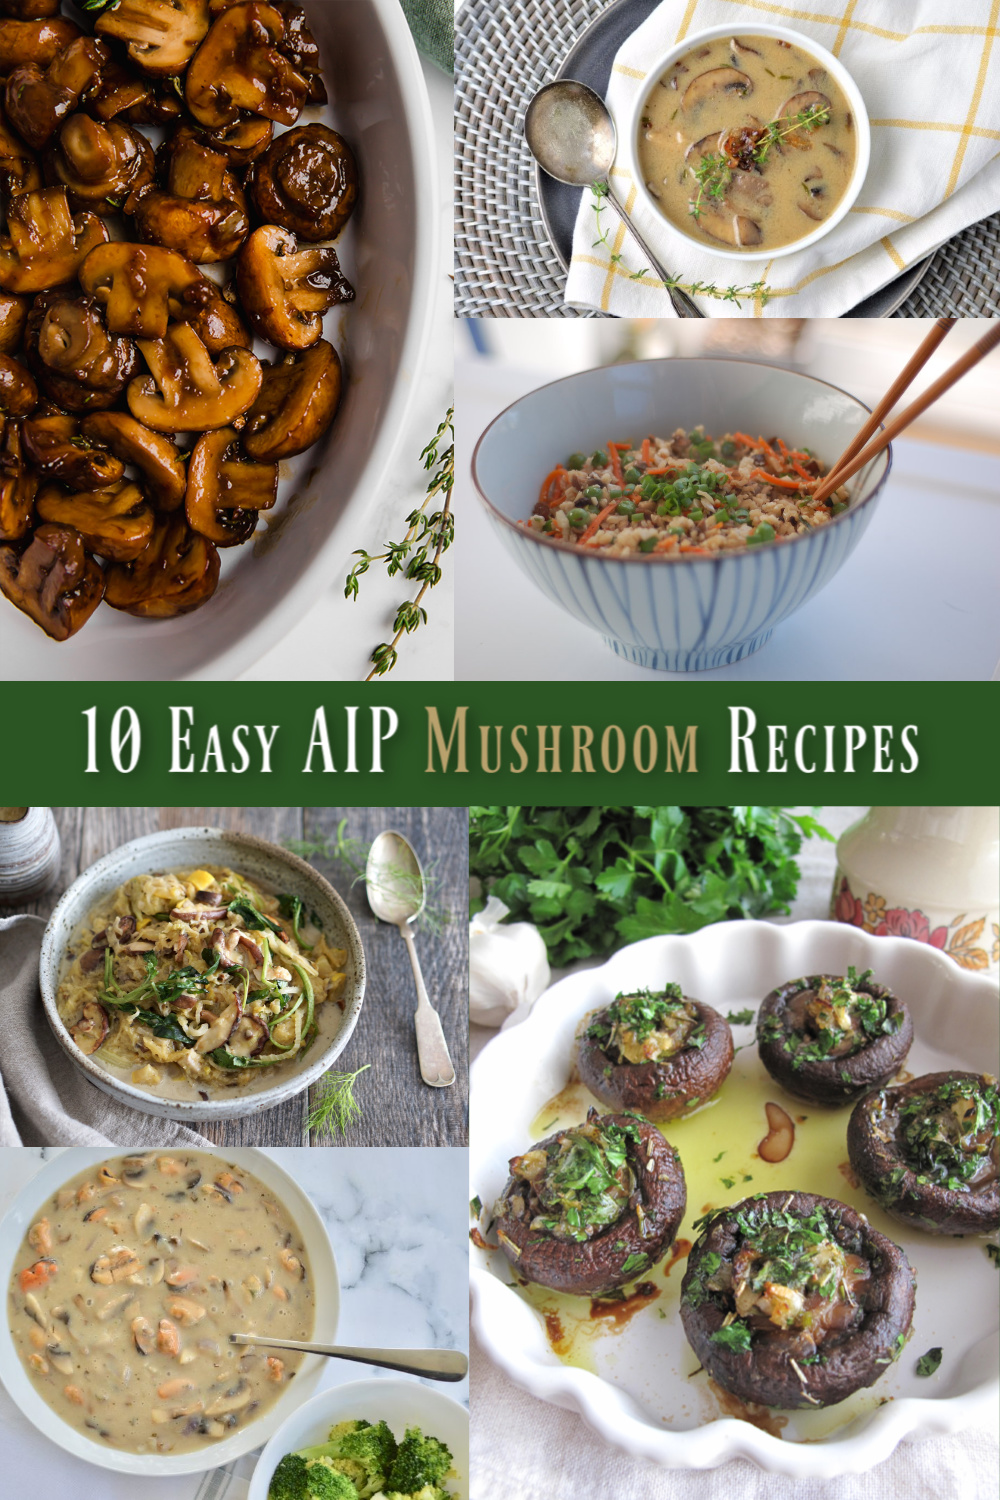 10 Easy AIP Mushroom Recipes